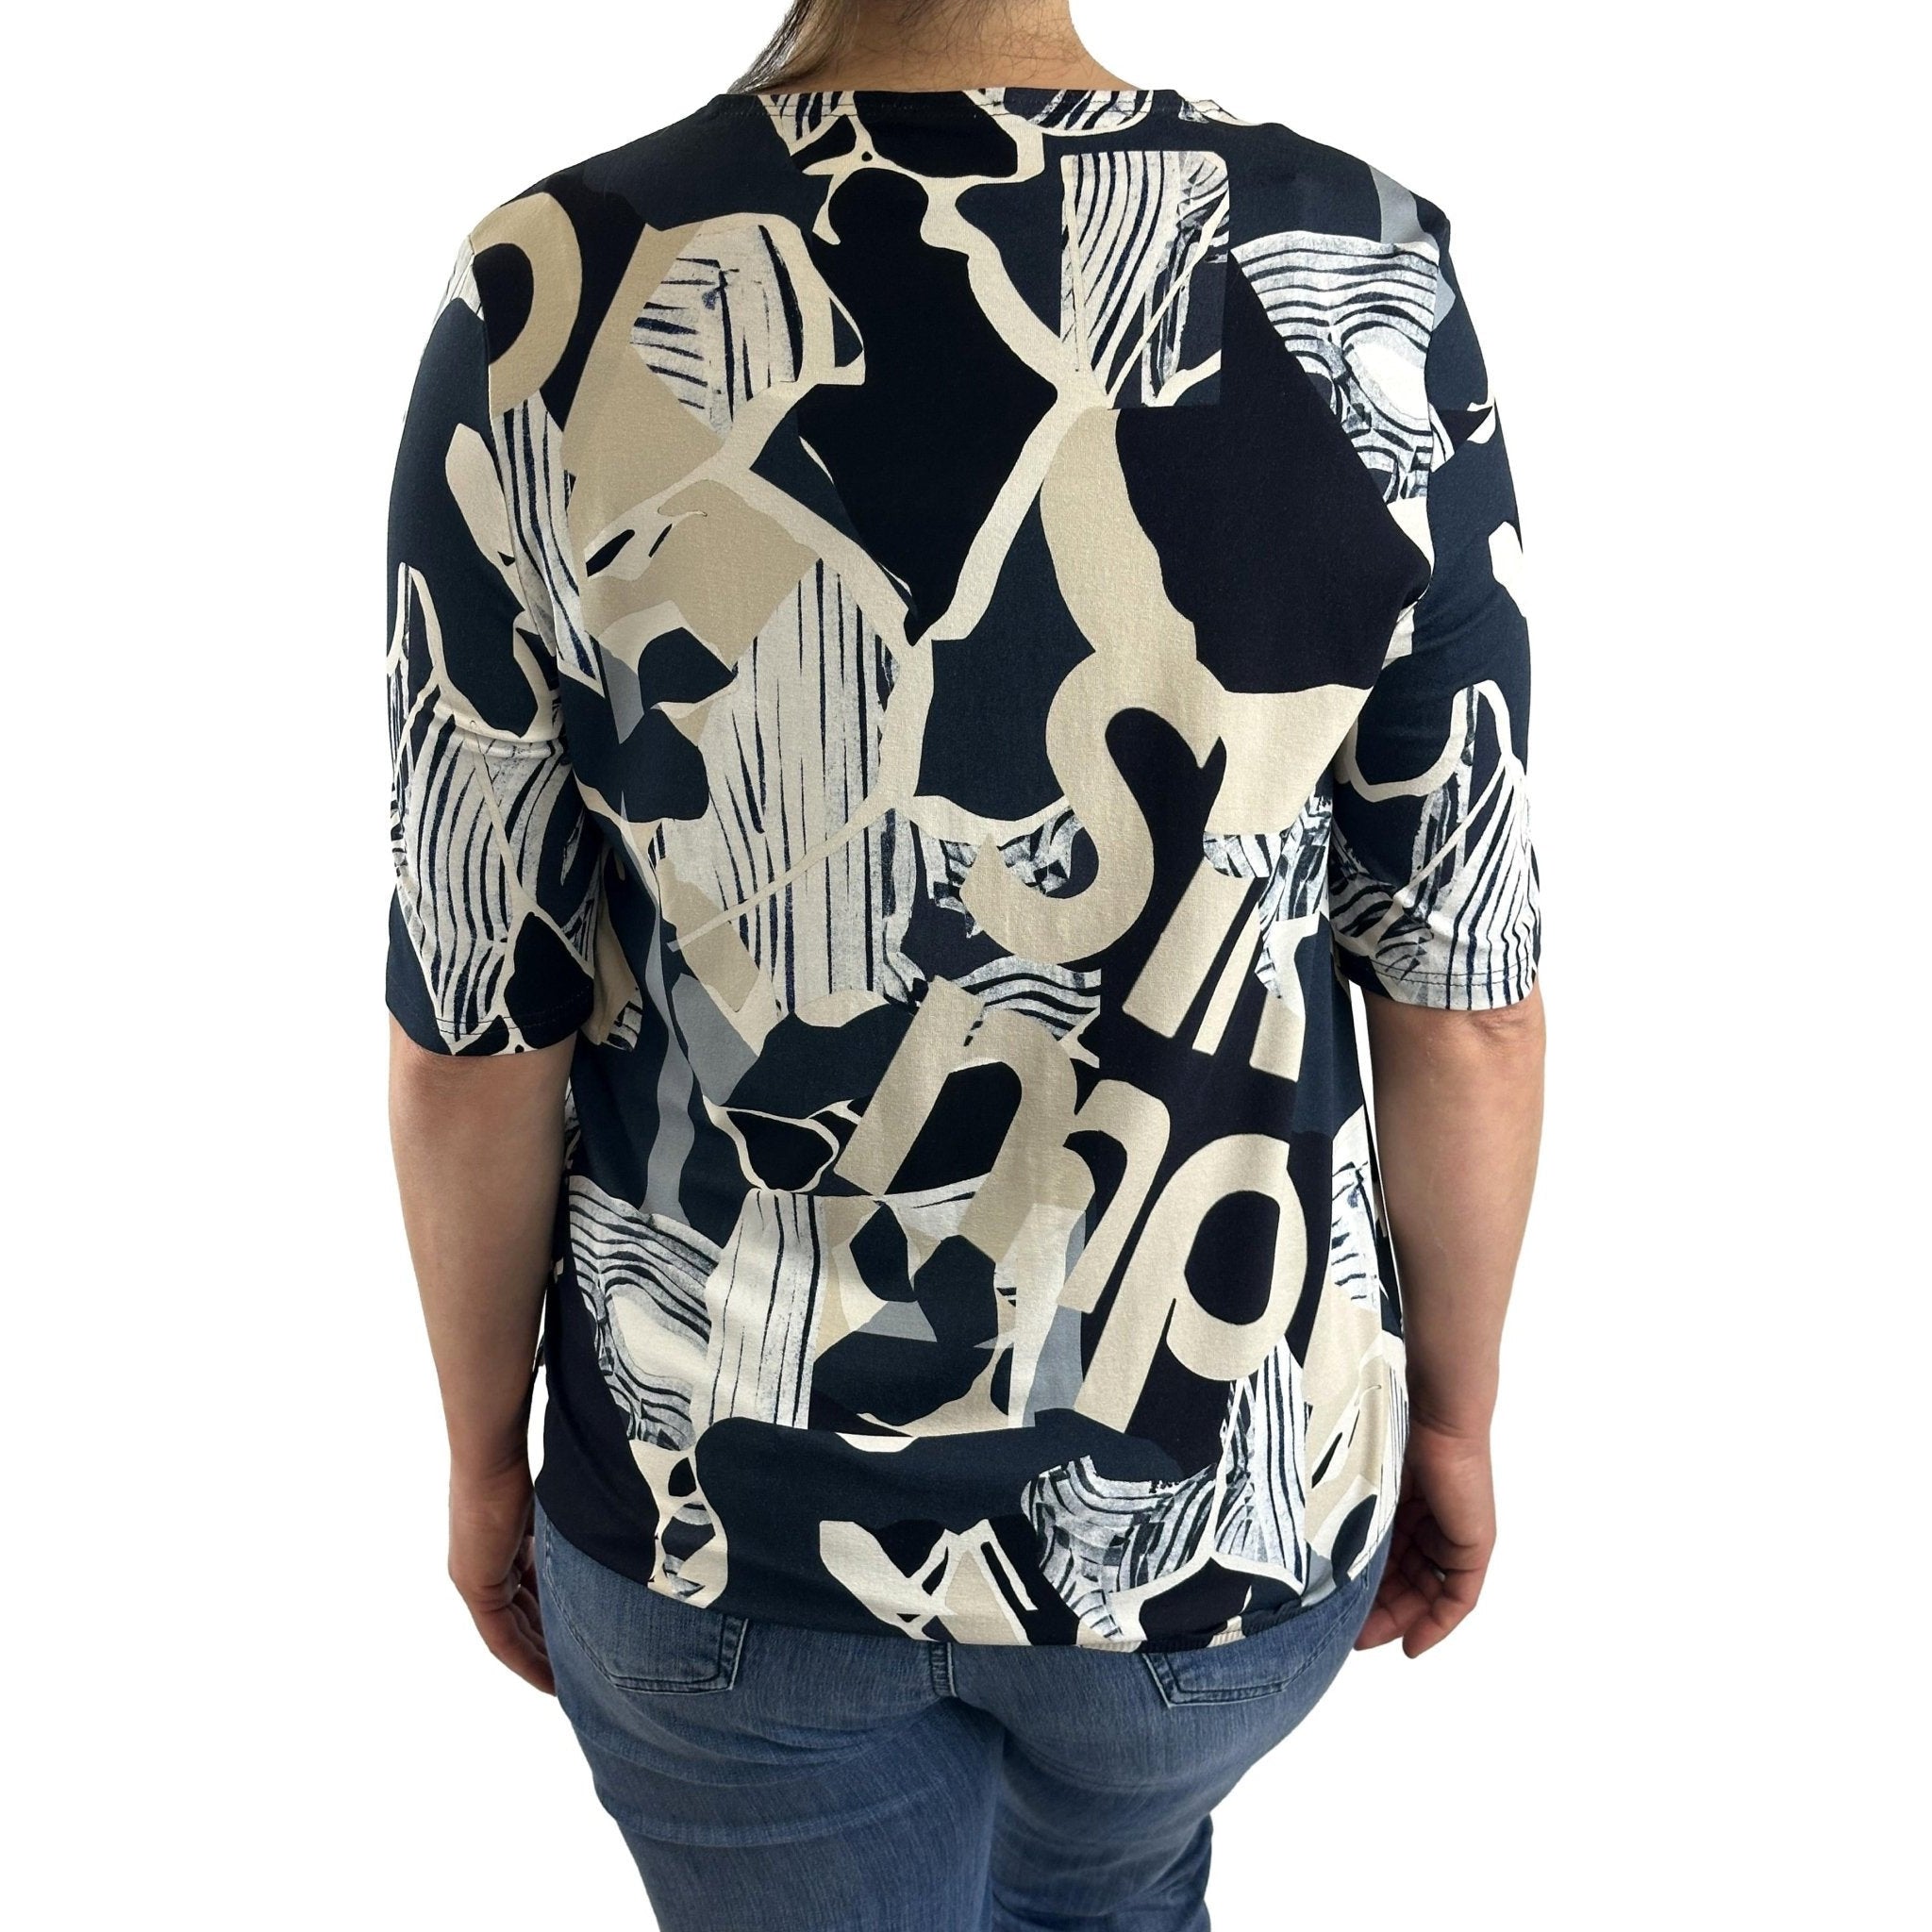 Seidel Shirt A 2015. Mode von Seidel